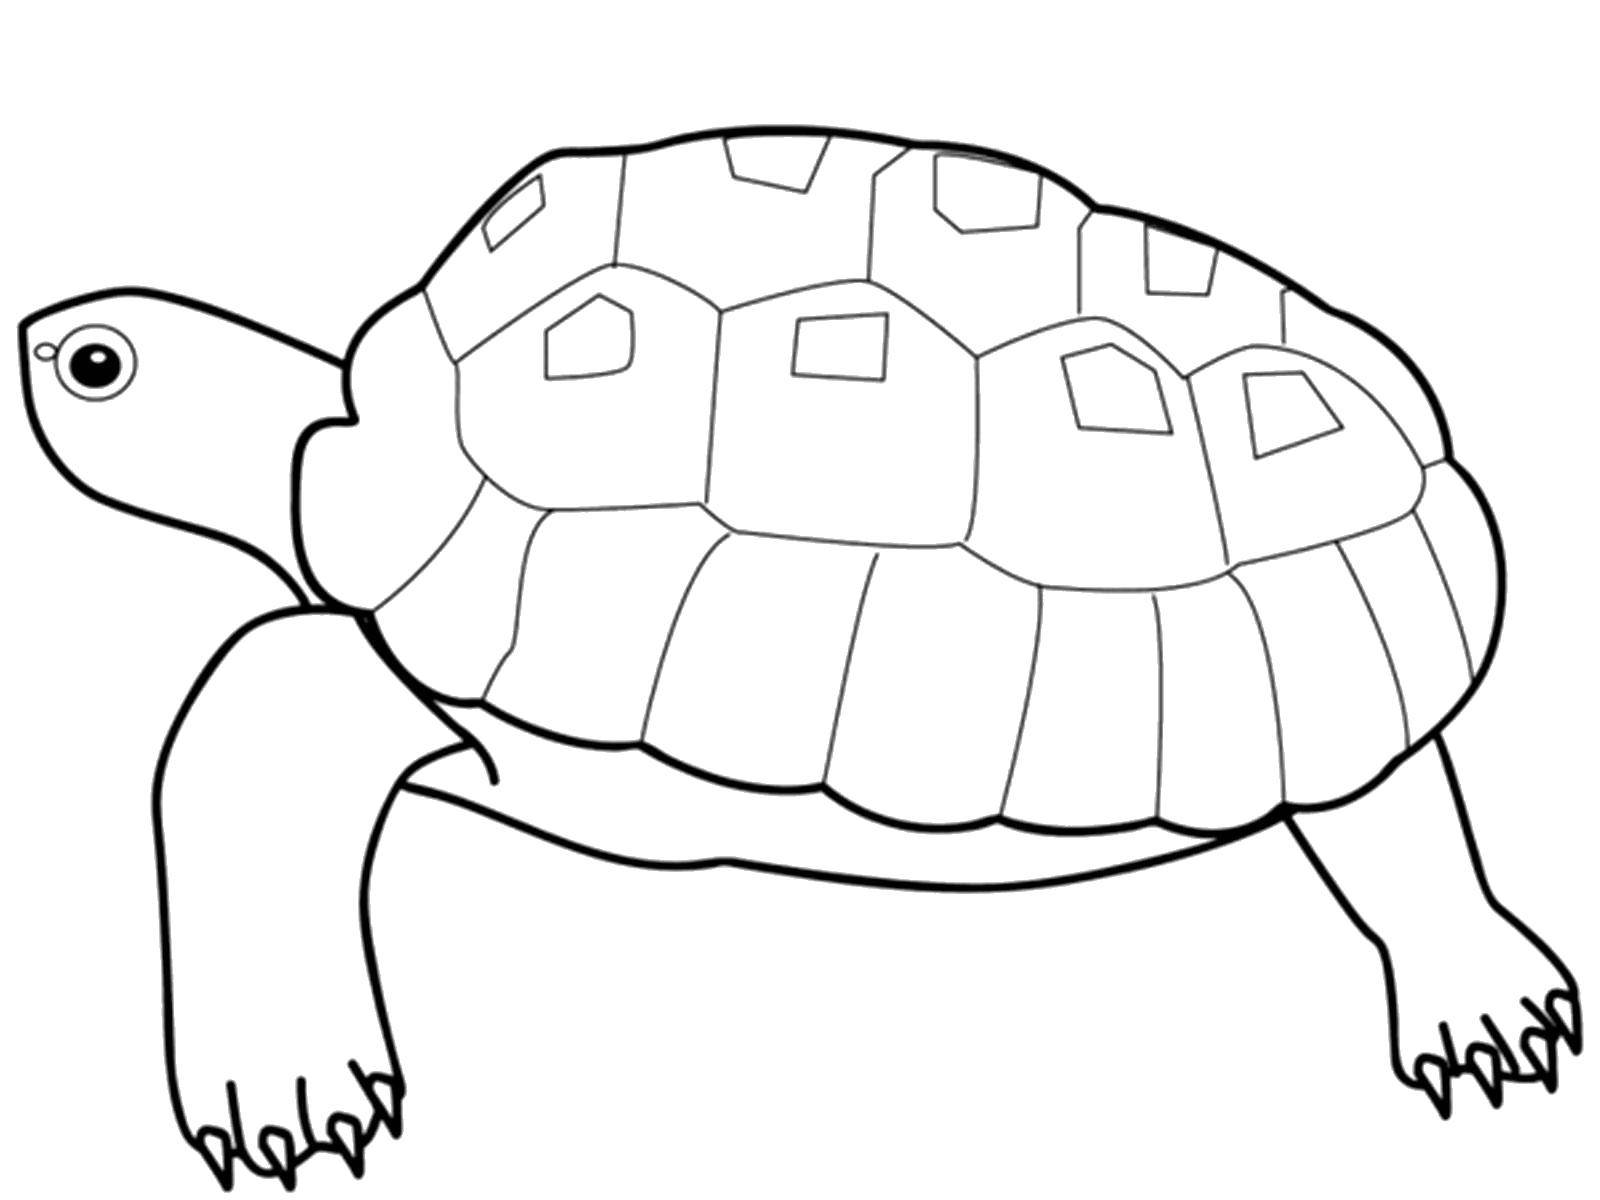 Название: Раскраска Черепашка. Категория: рептилии. Теги: Рептилия, черепаха.